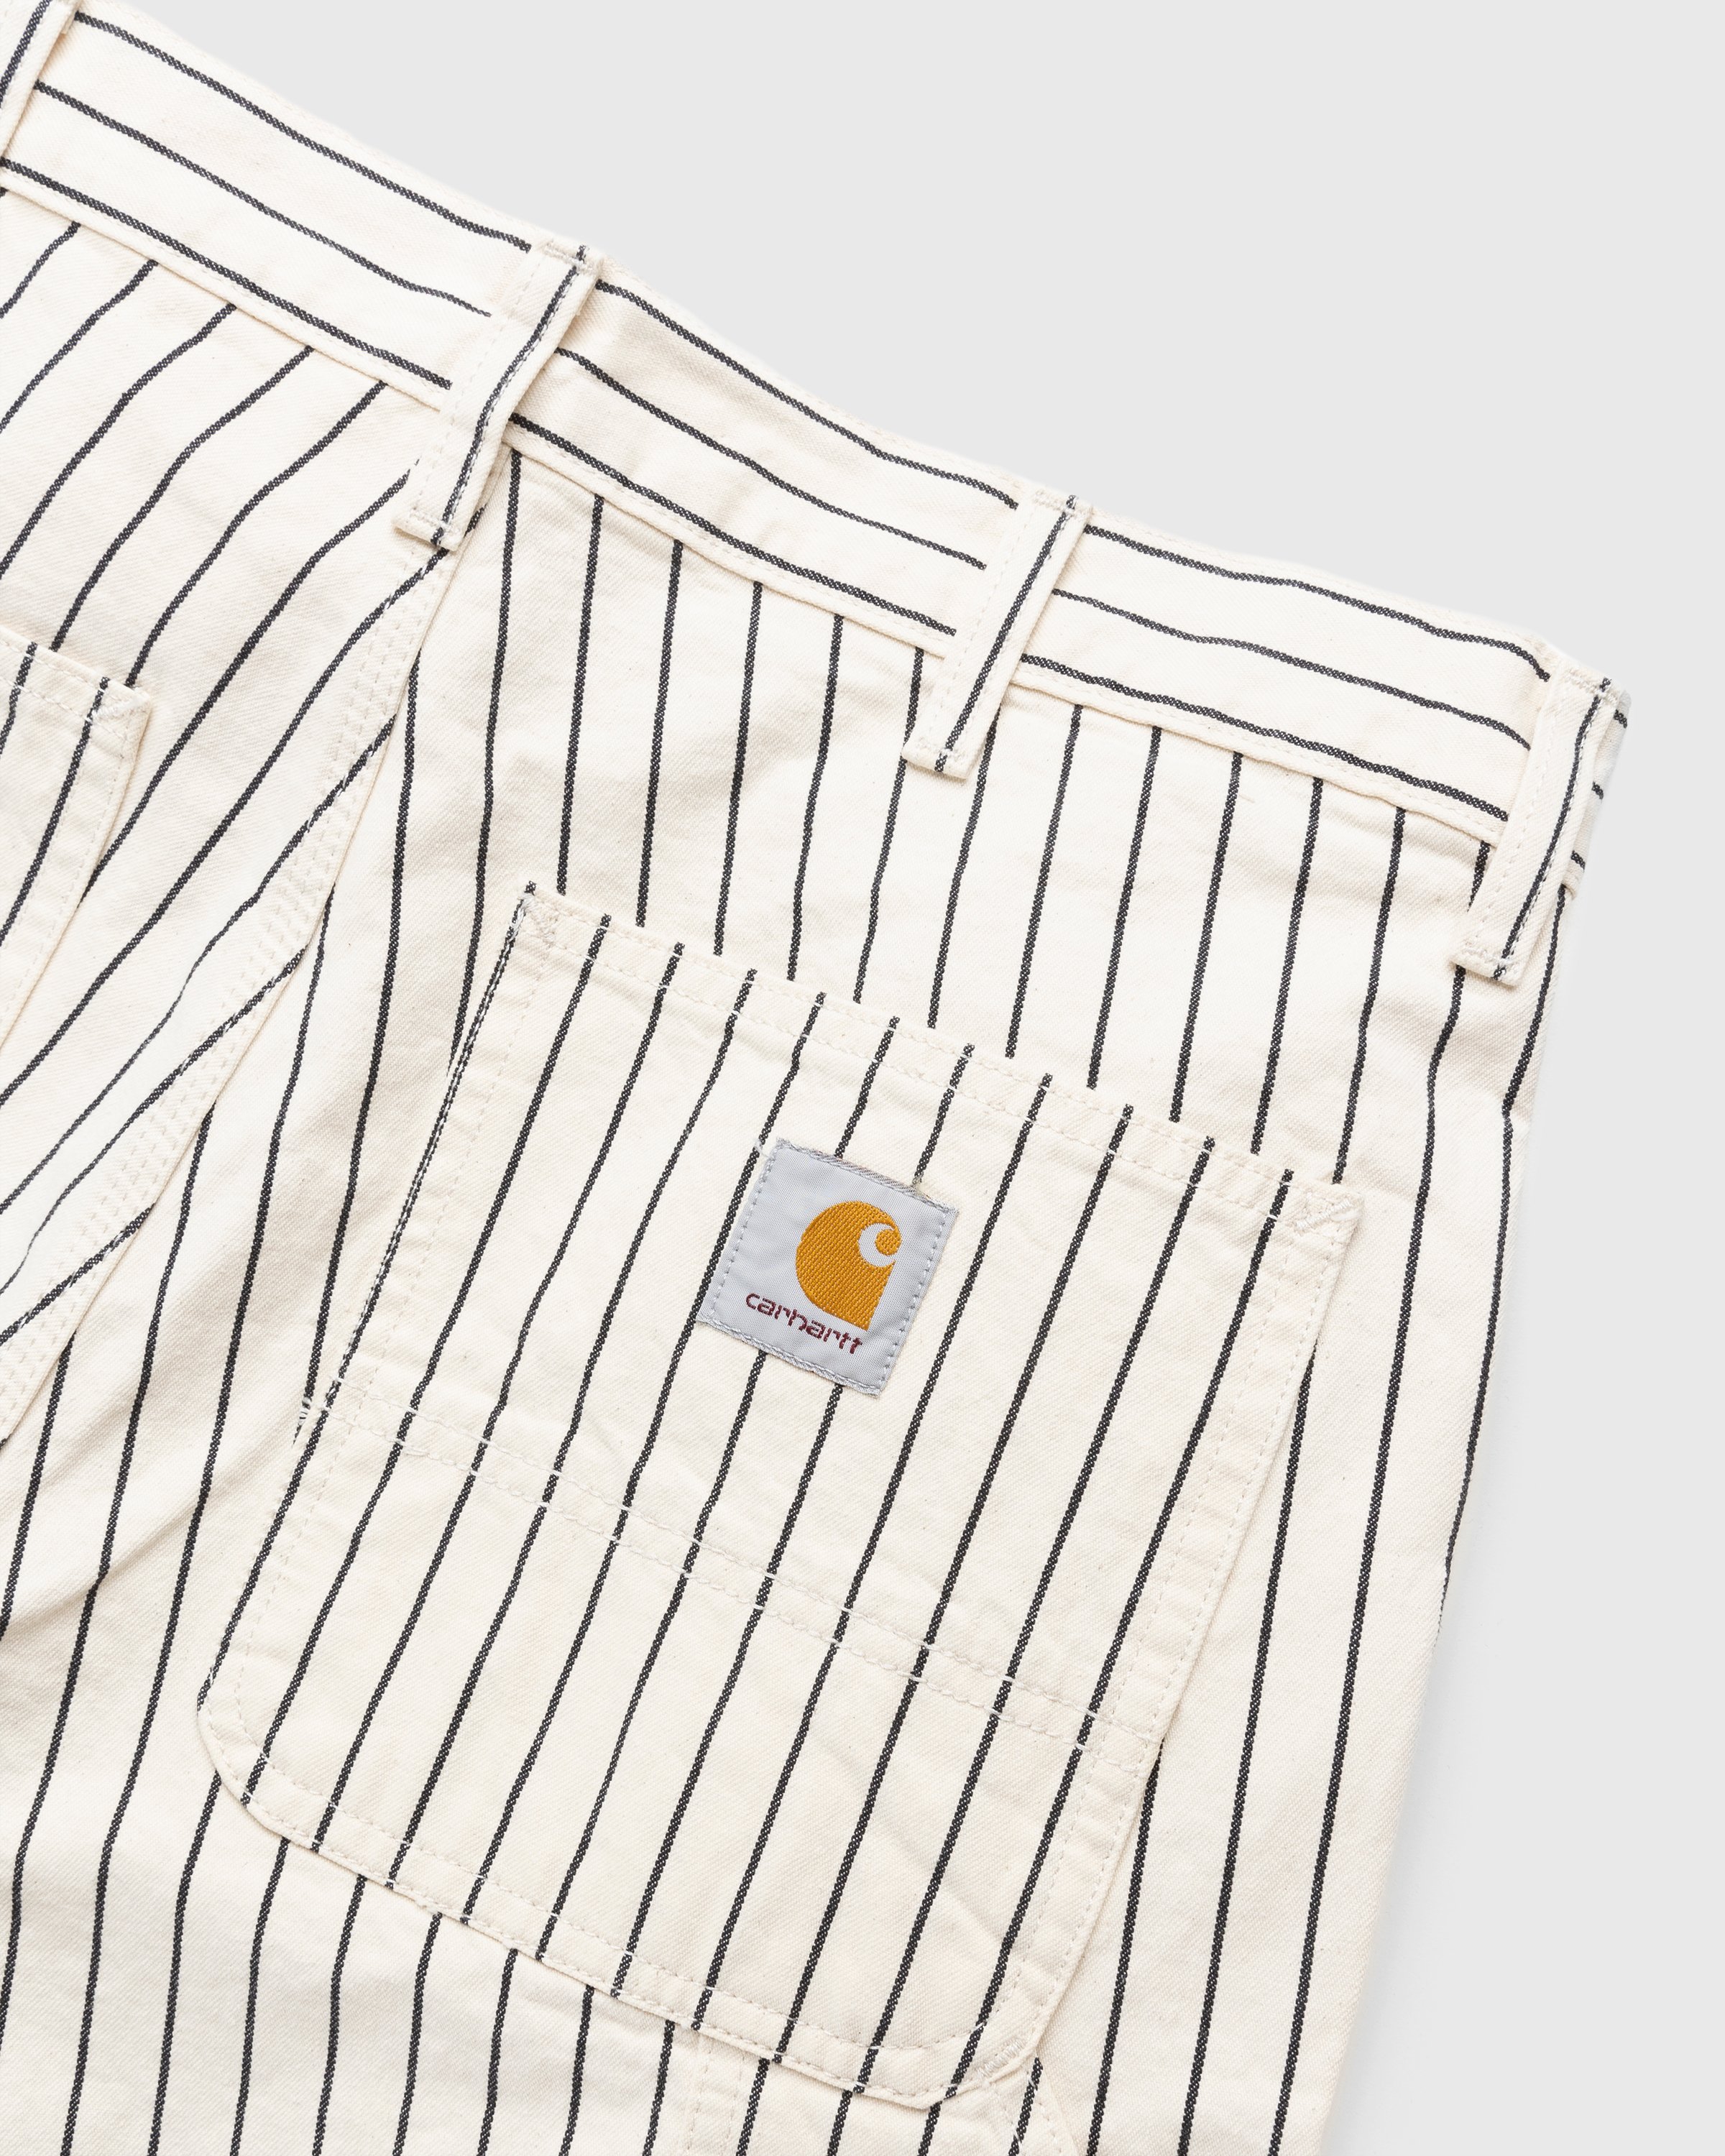 Carhartt WIP - Trade Single Knee Pant Wax/Black Rinsed - Clothing - White - Image 4